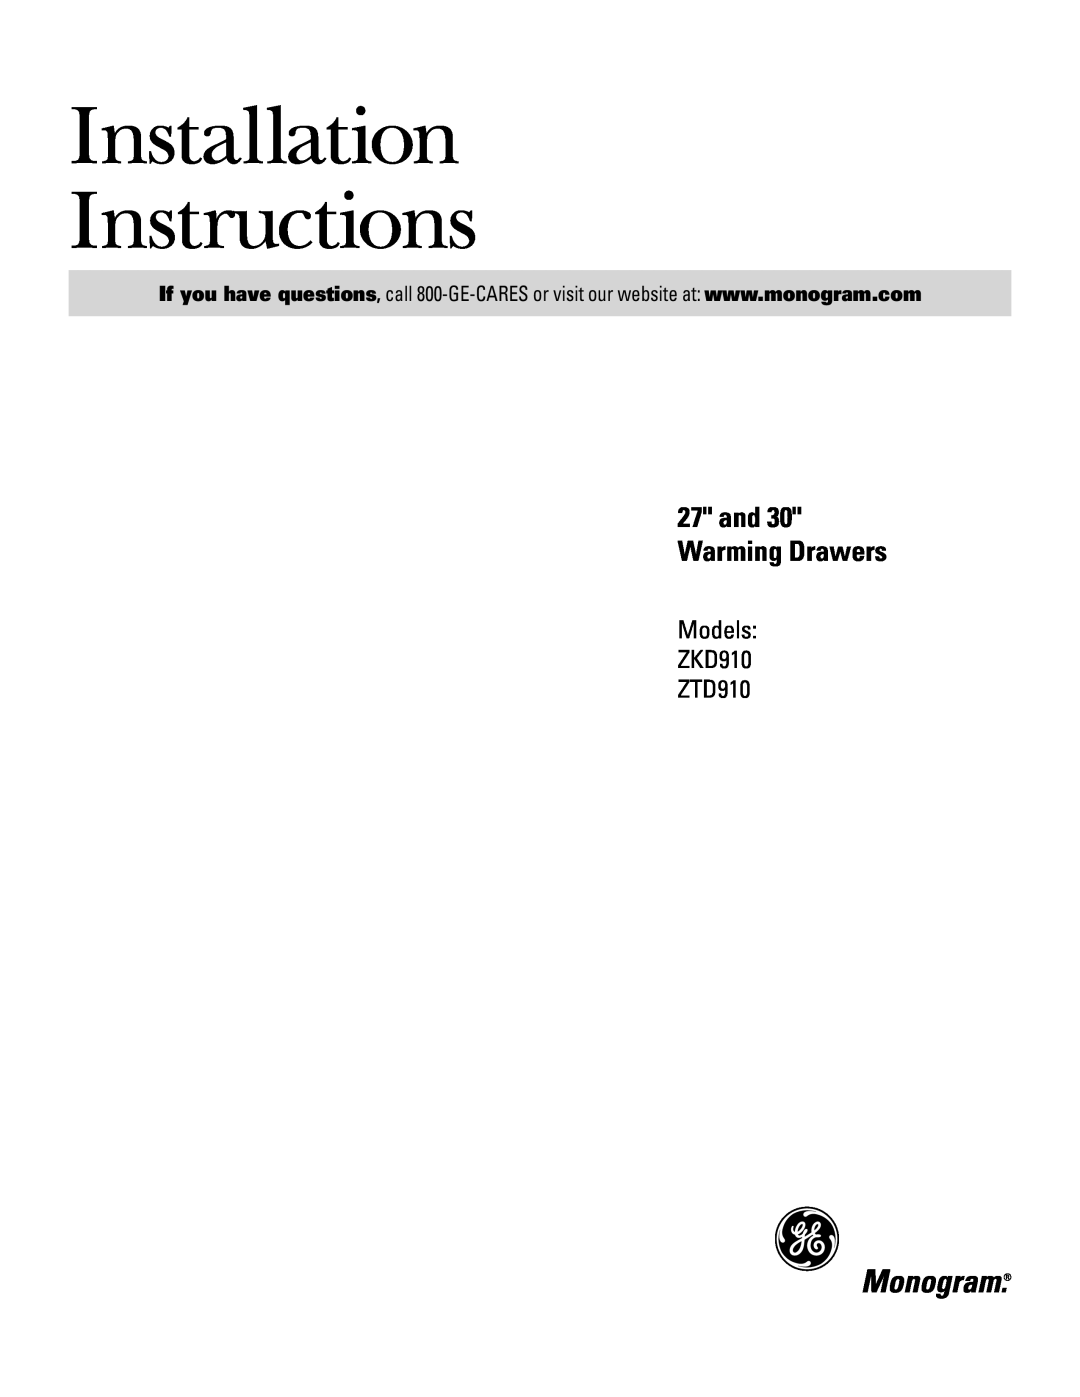 GE Monogram installation instructions Installation Instructions, Models ZKD910 ZTD910, and 30 Warming Drawers 